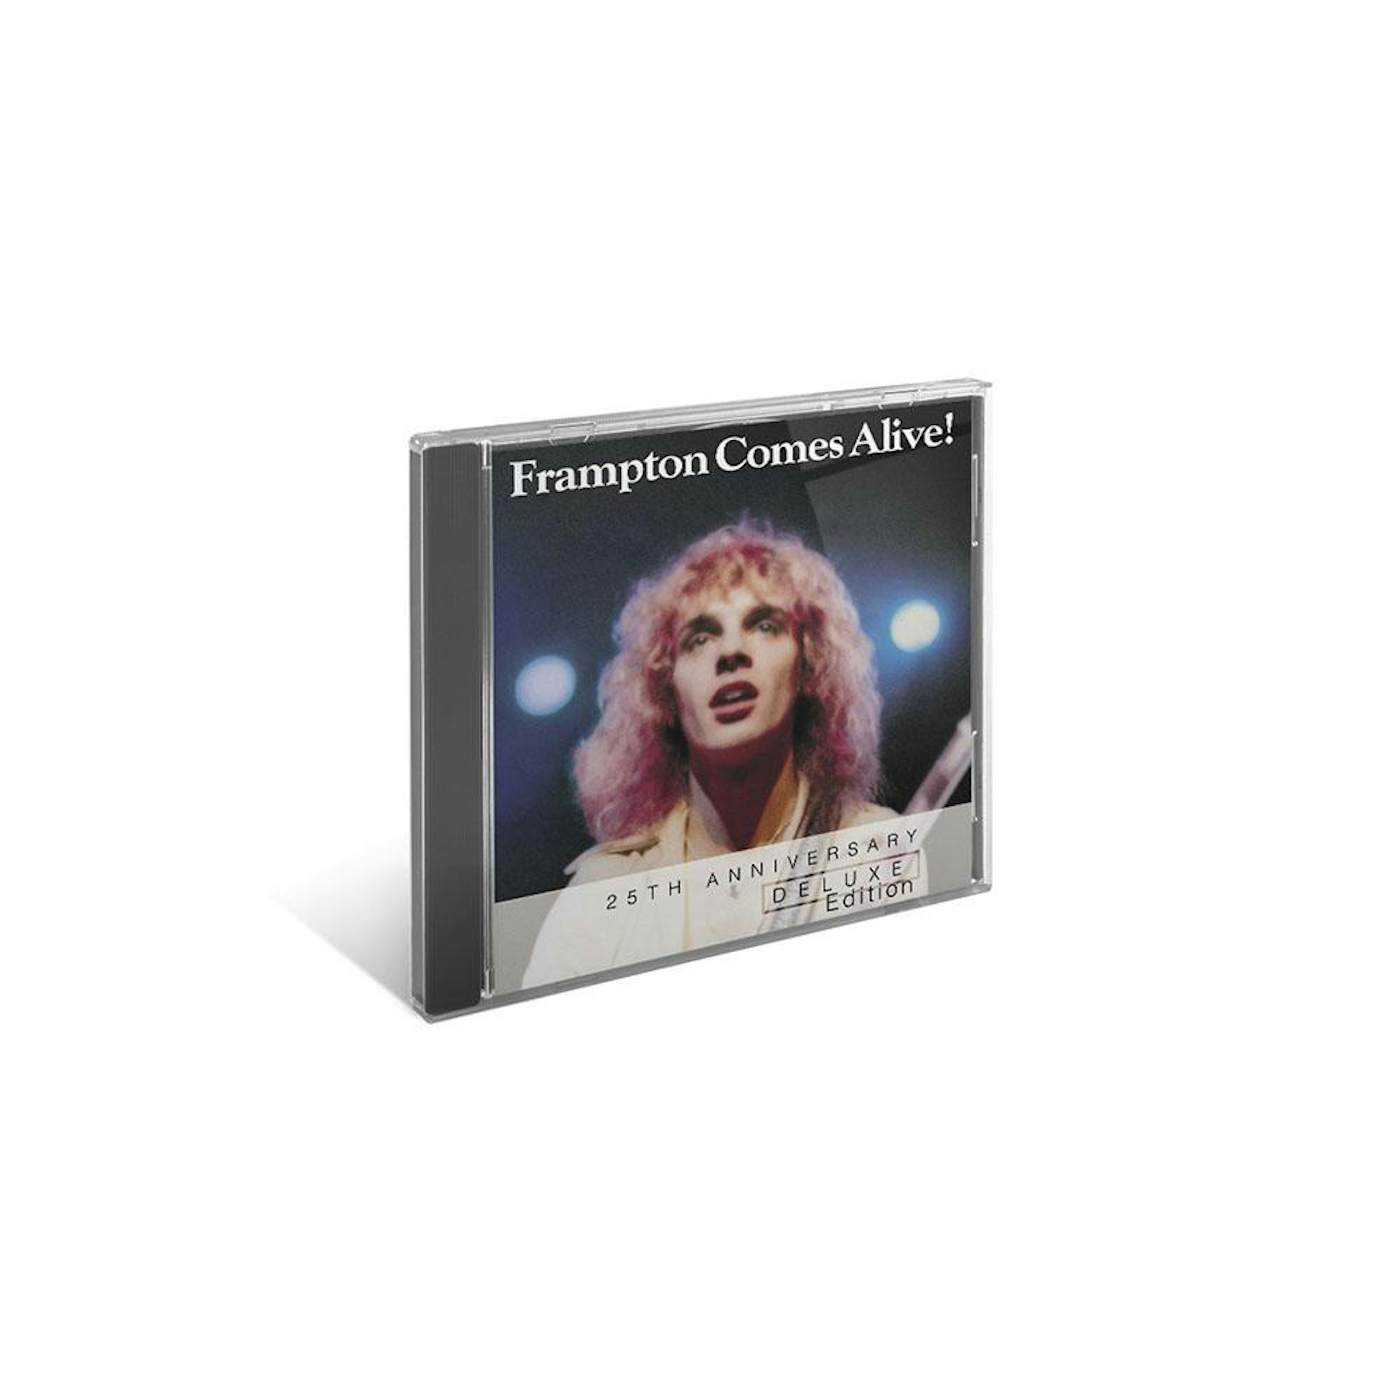 Peter Frampton Frampton Comes Alive! Deluxe Edition 2CD